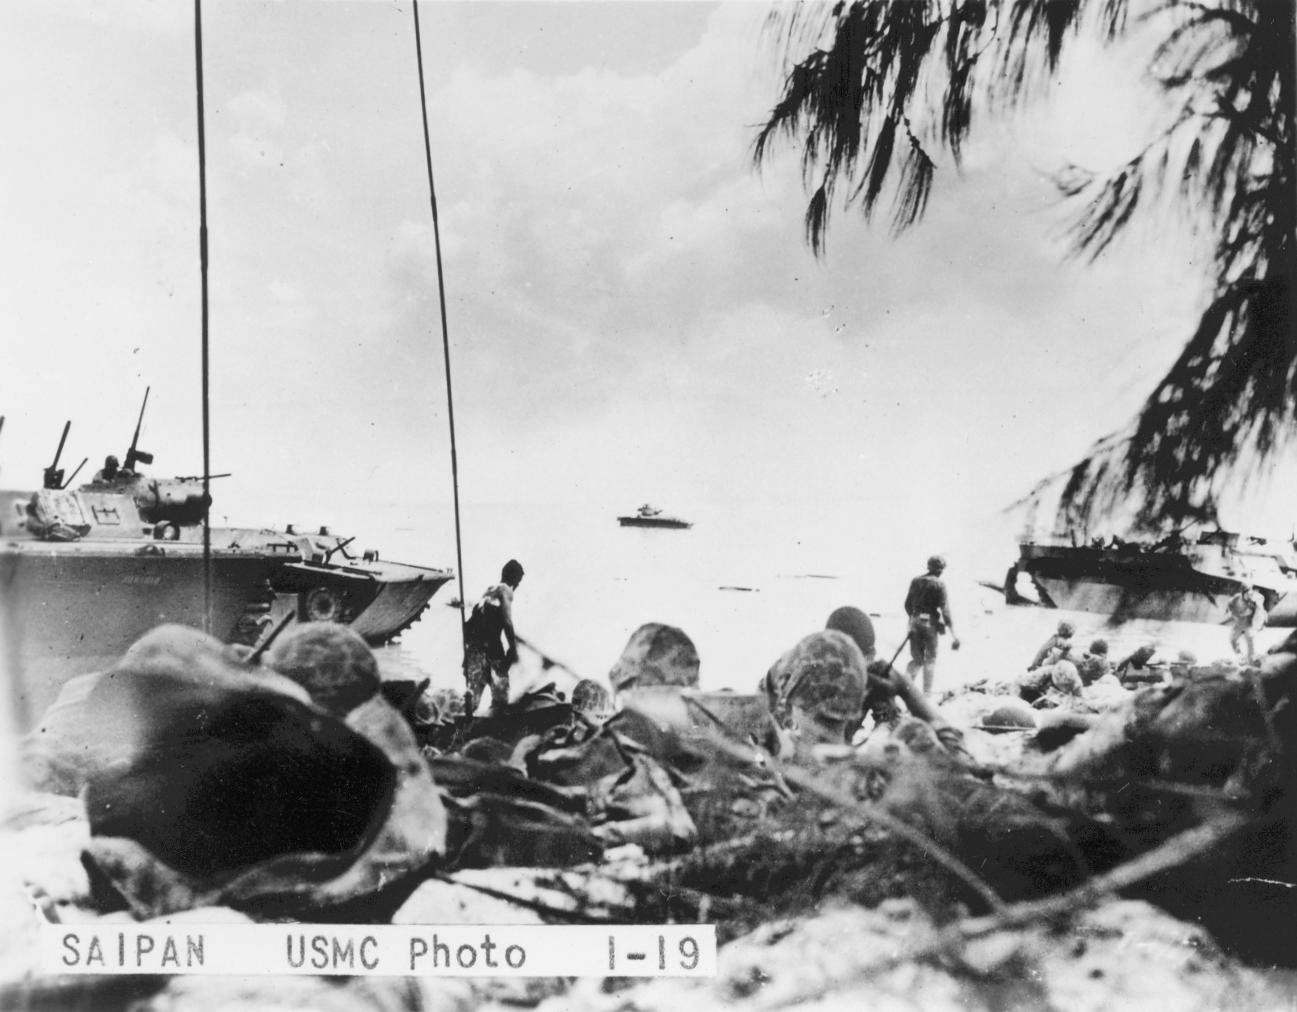 US Marines on a beach on Saipan, Mariana Islands, 15 Jun 1944